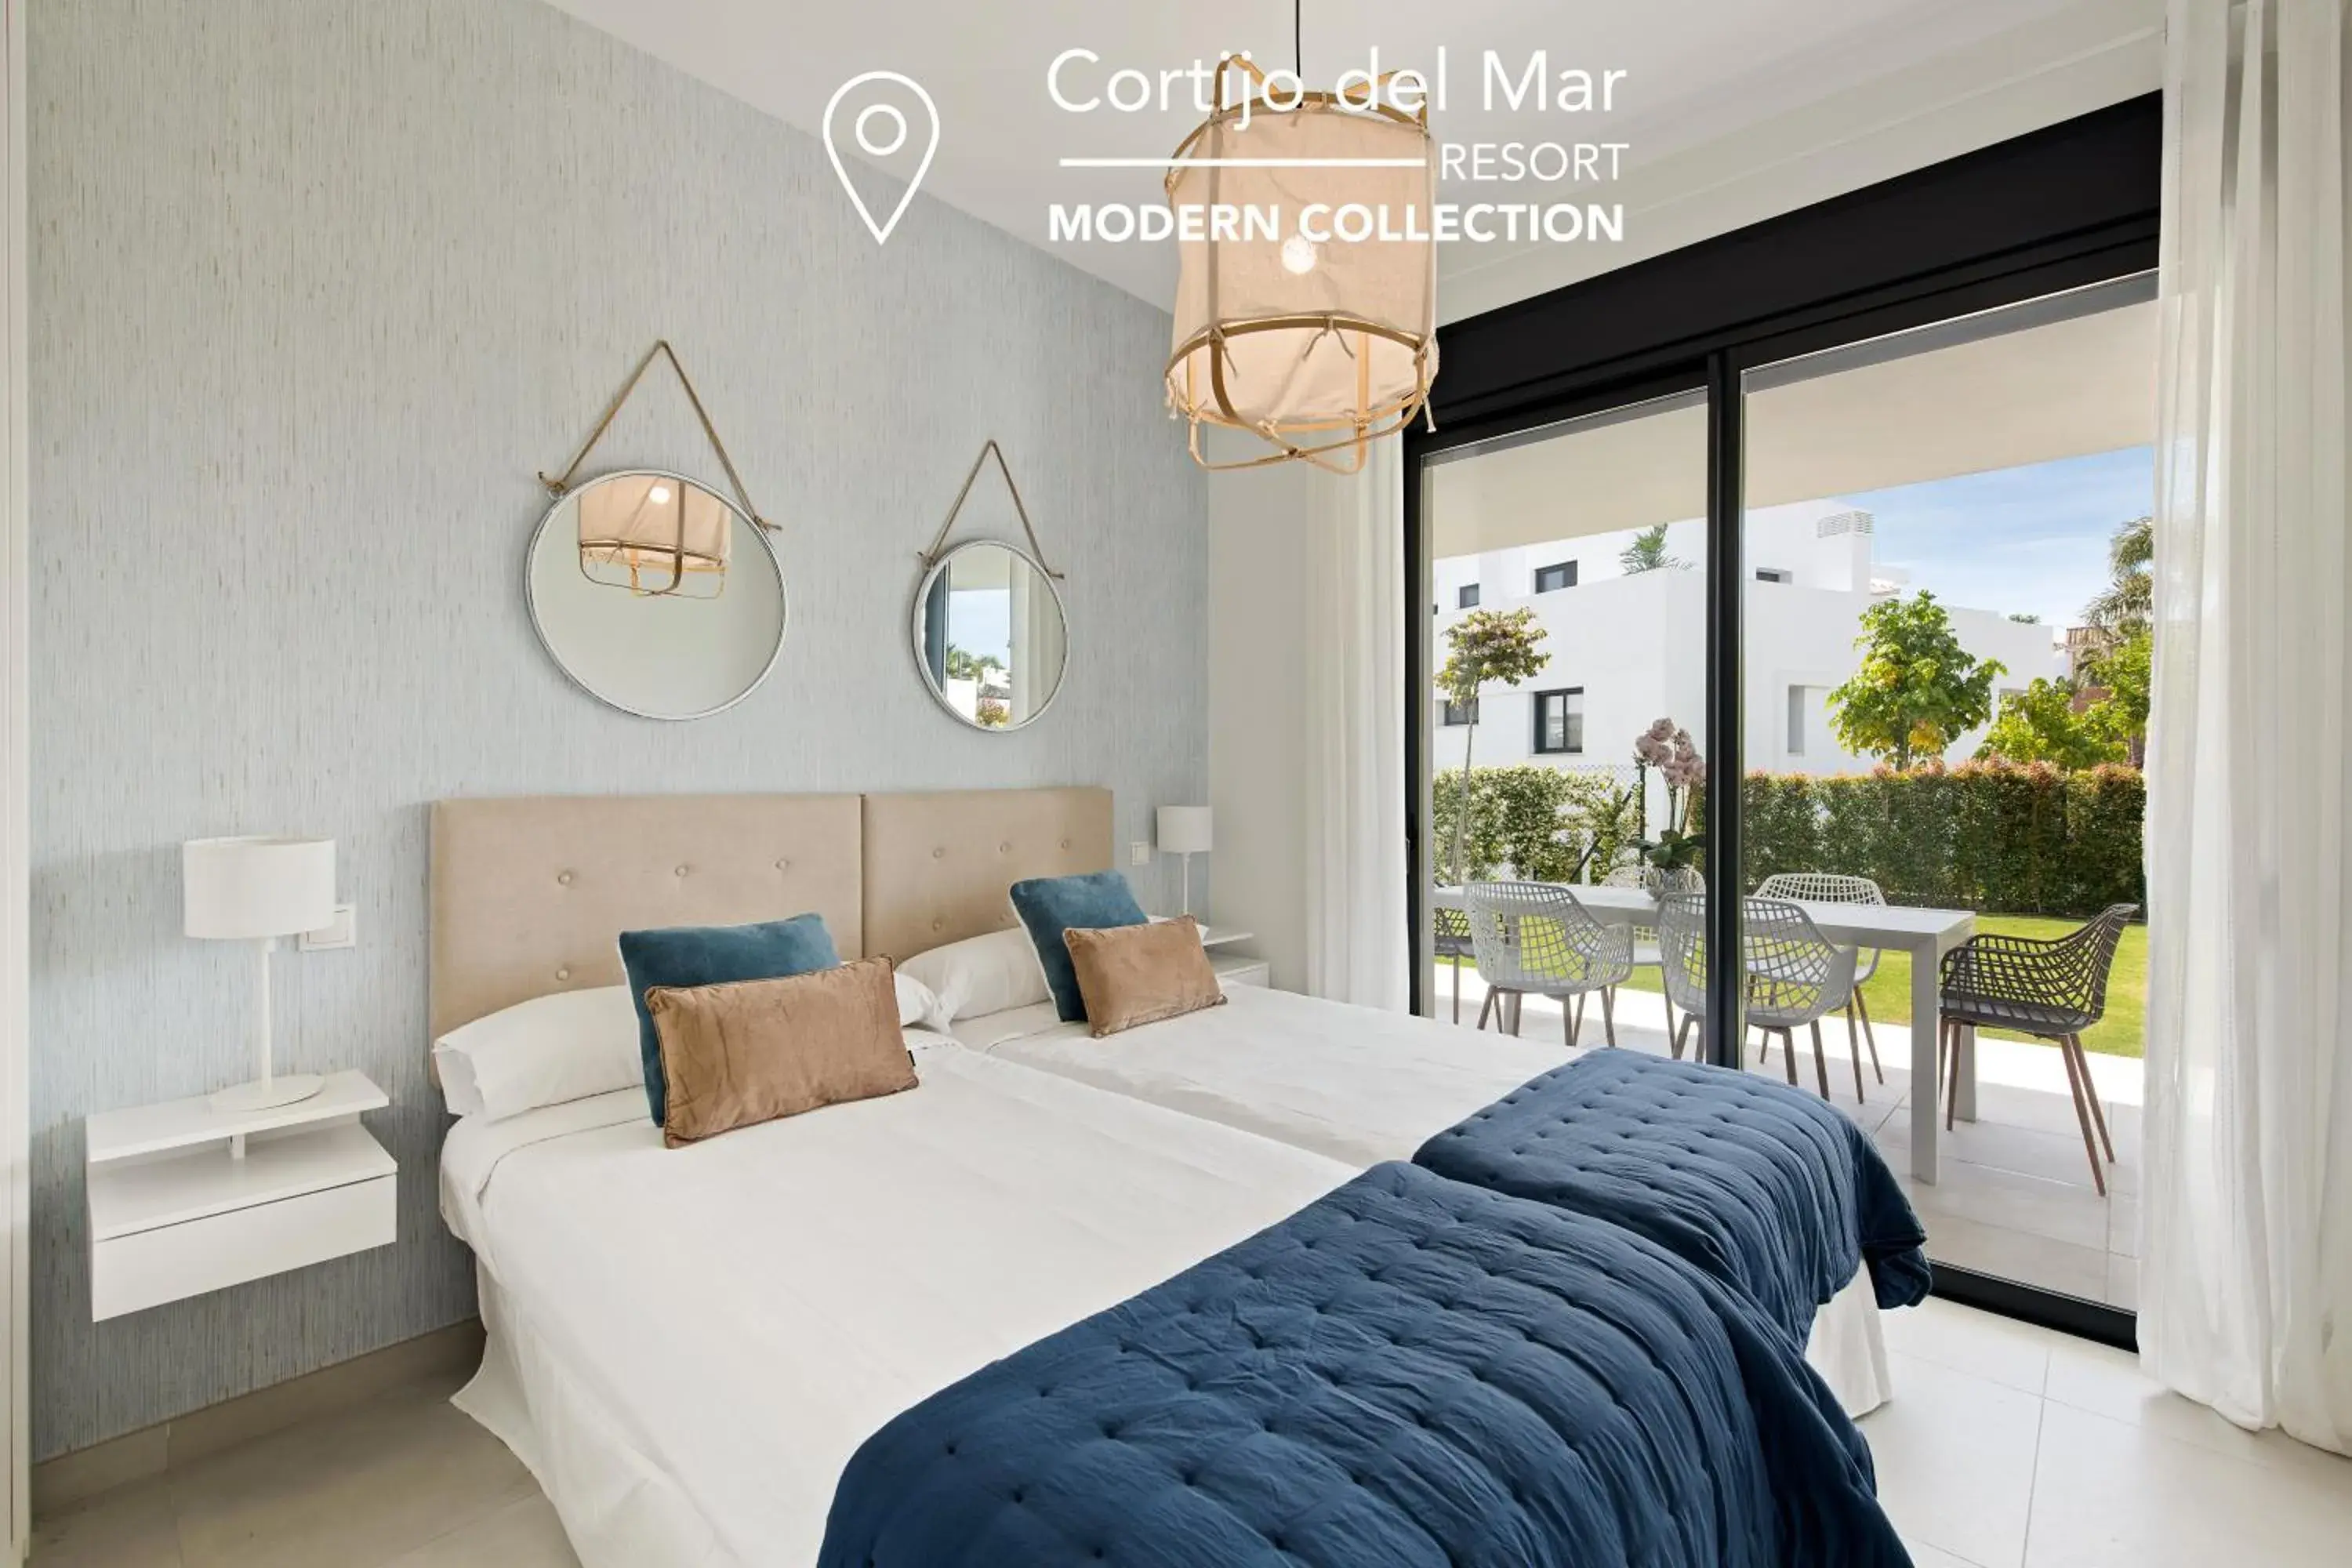 Bedroom in Cortijo Del Mar Resort